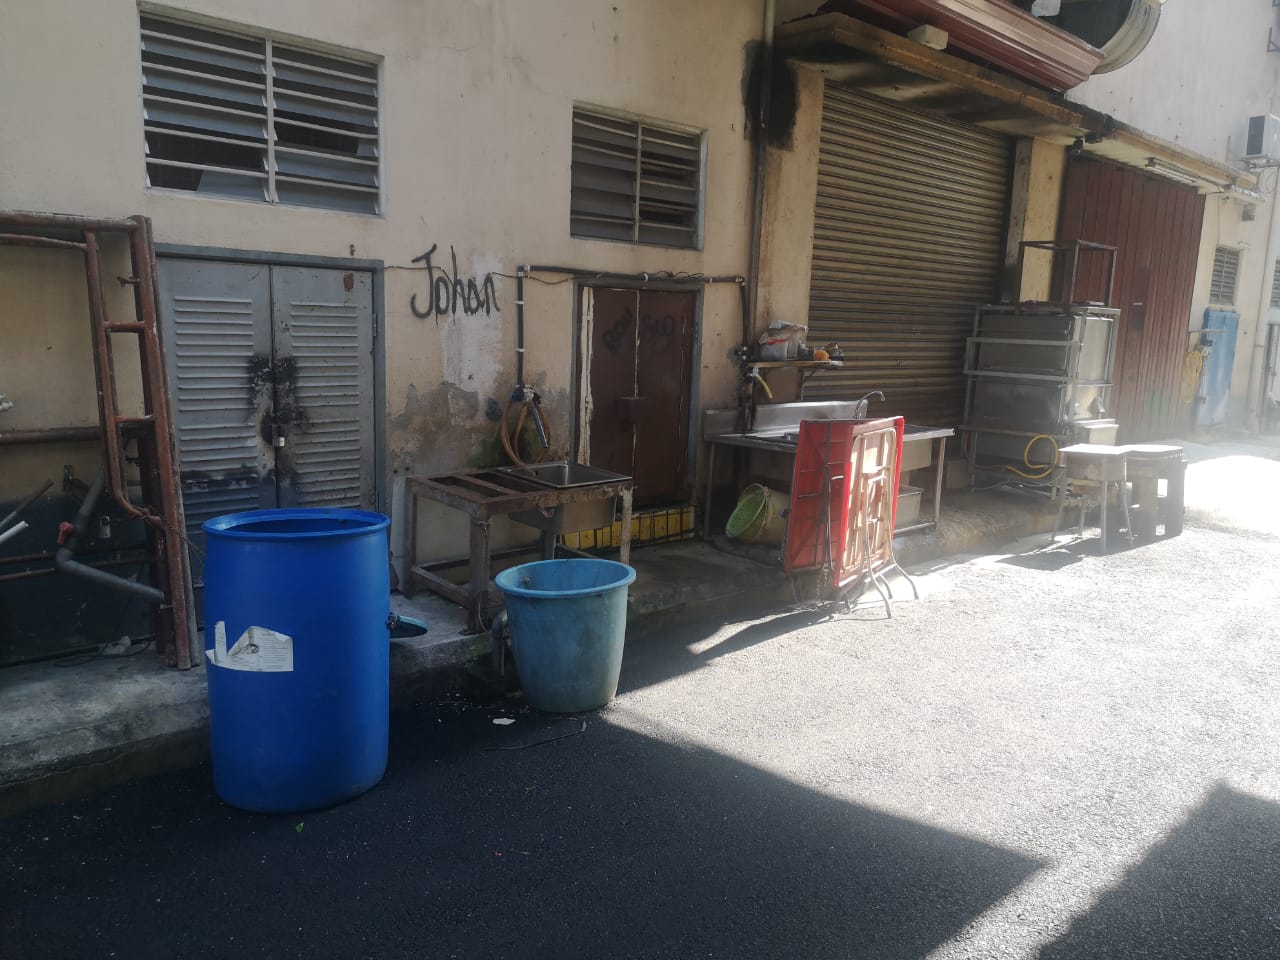 +mz头//大都会/峇尤丁宜商业区处处是垃圾堆